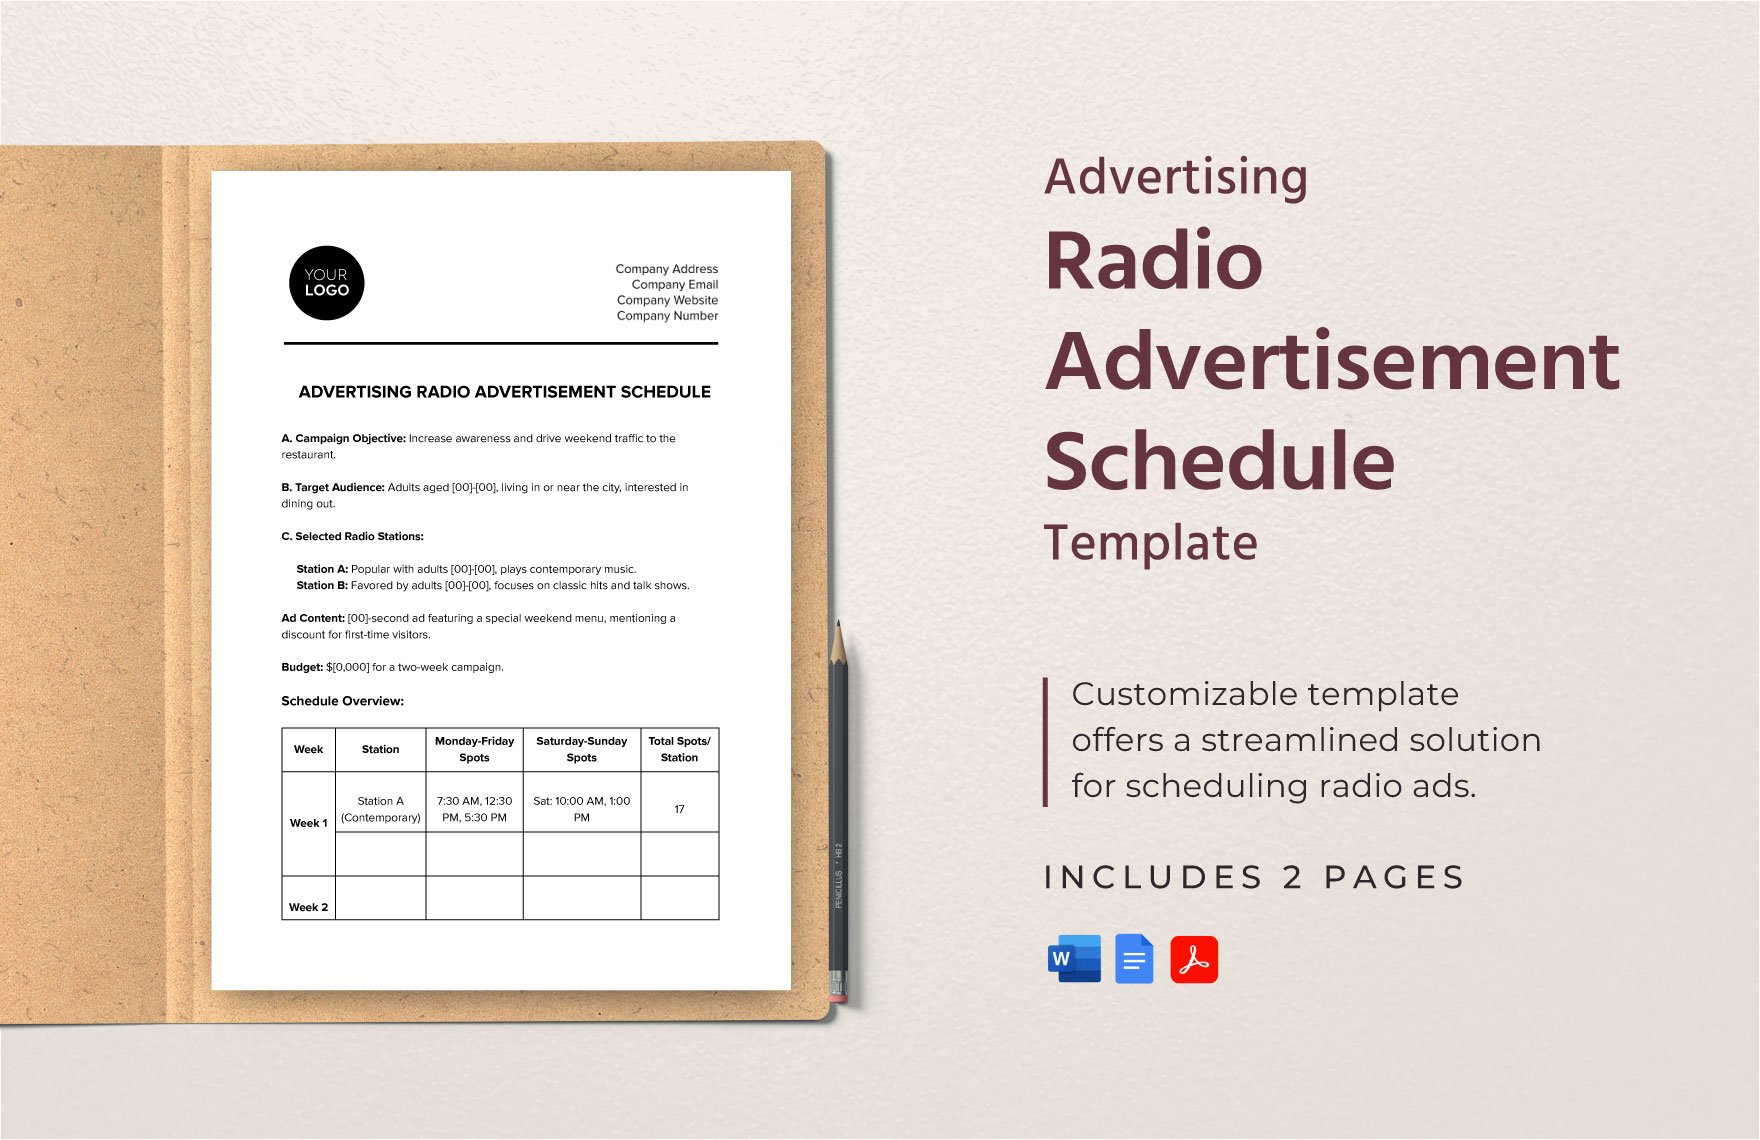 Advertising Radio Advertisement Schedule Template in Word, Google Docs, PDF